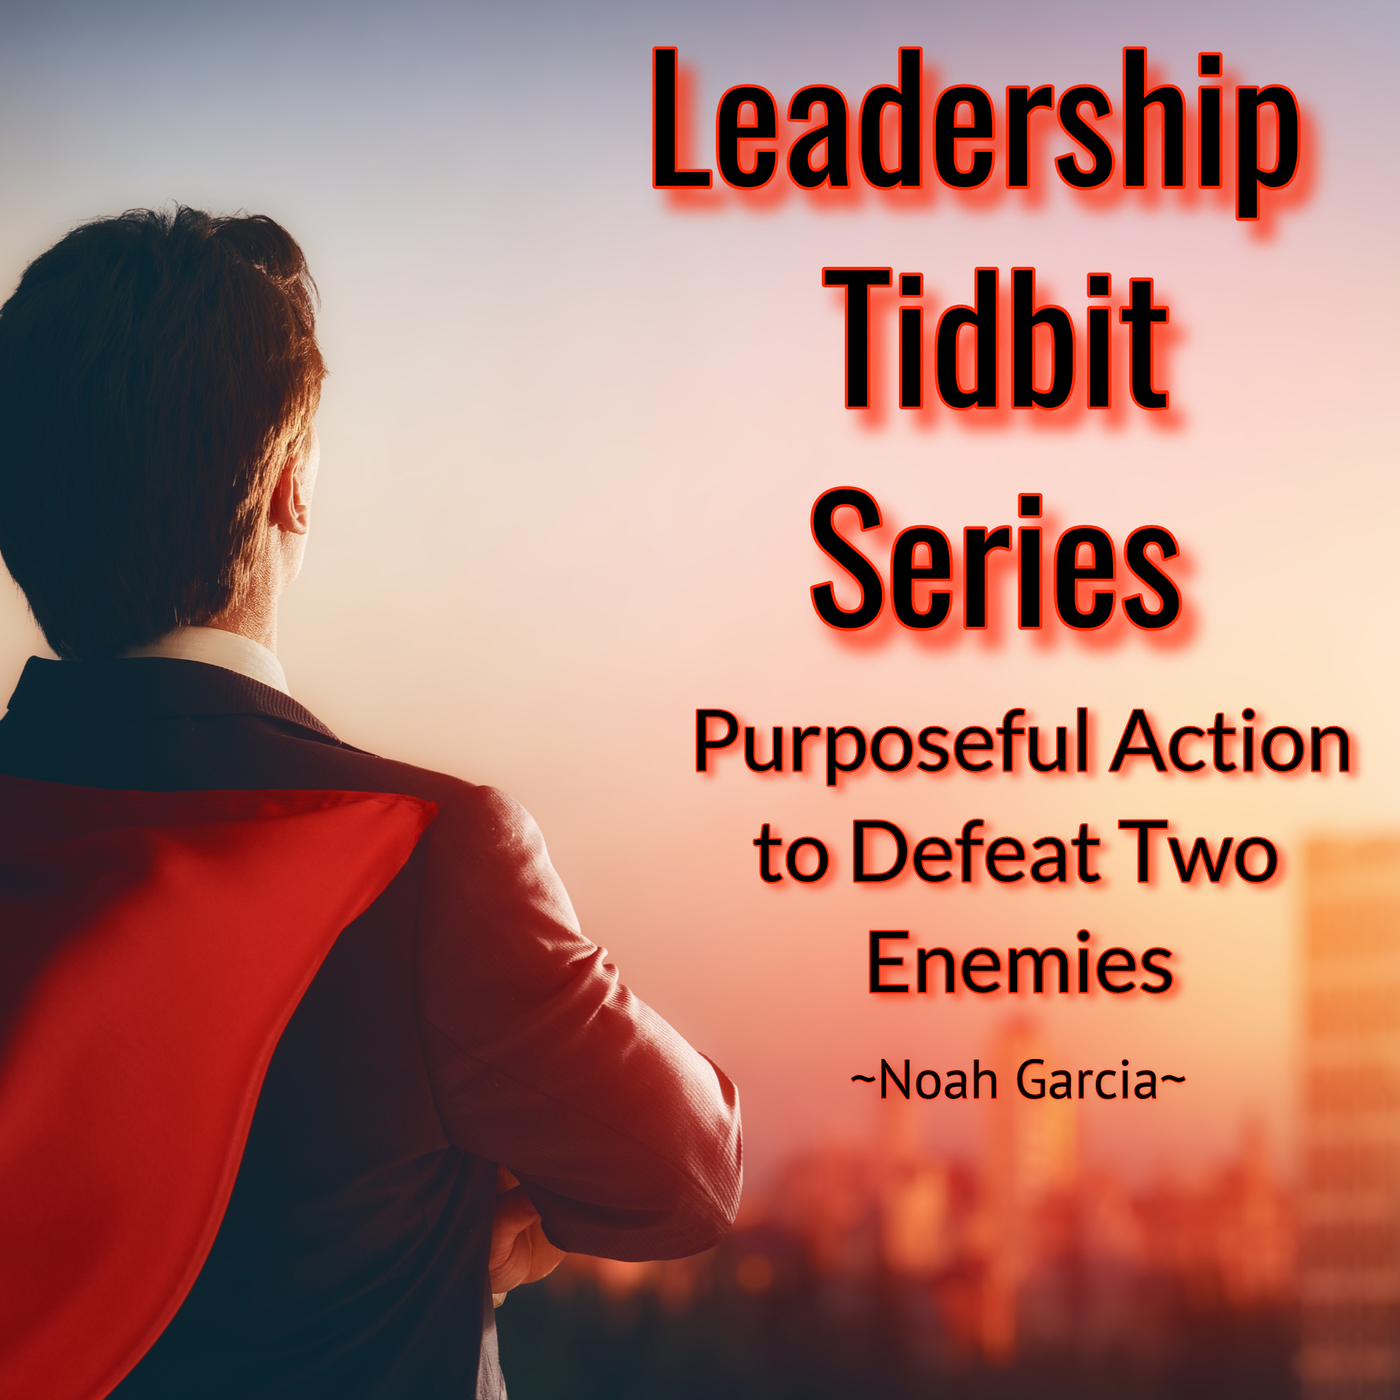 Leadership Tidbit Series: Purposeful Action to Defeat Two Enemies